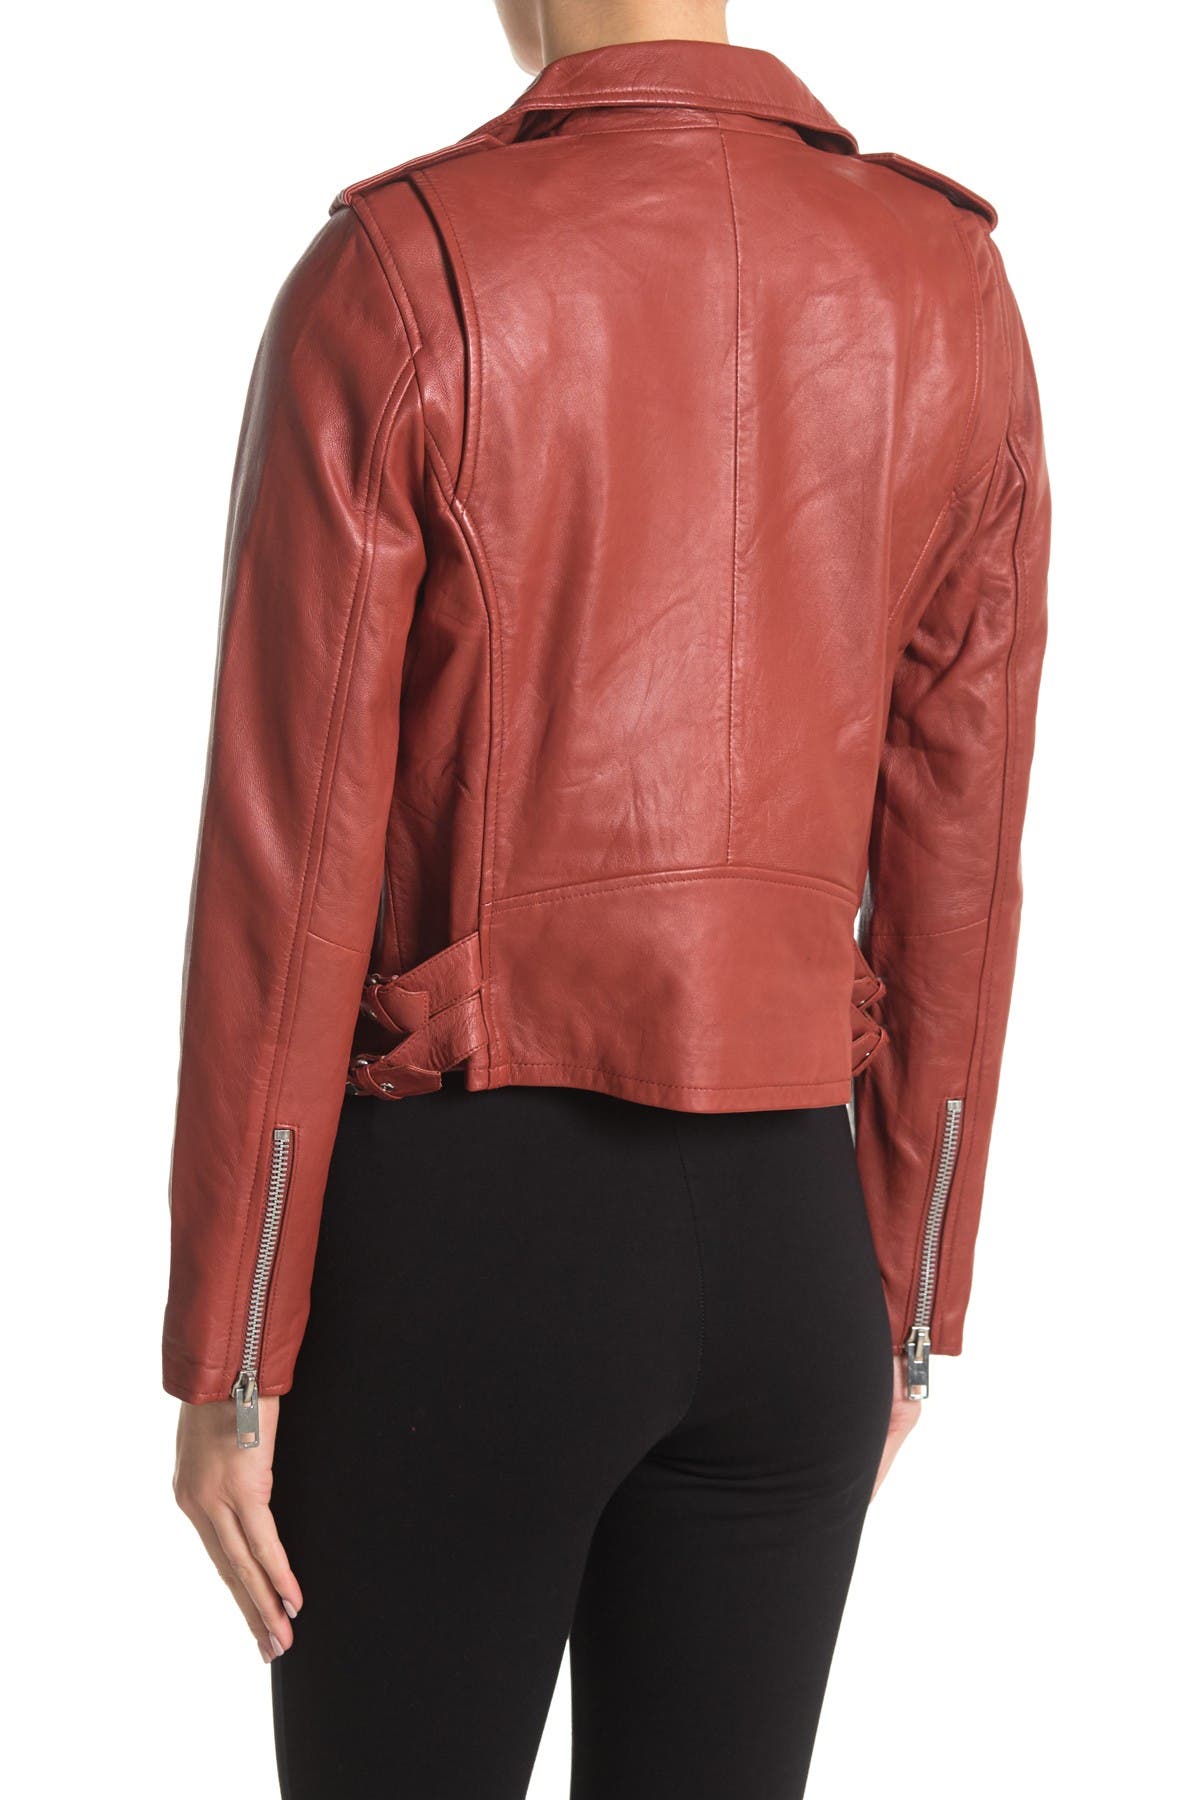 Walter Baker Liz Leather Crop Moto Jacket In Medium Red2